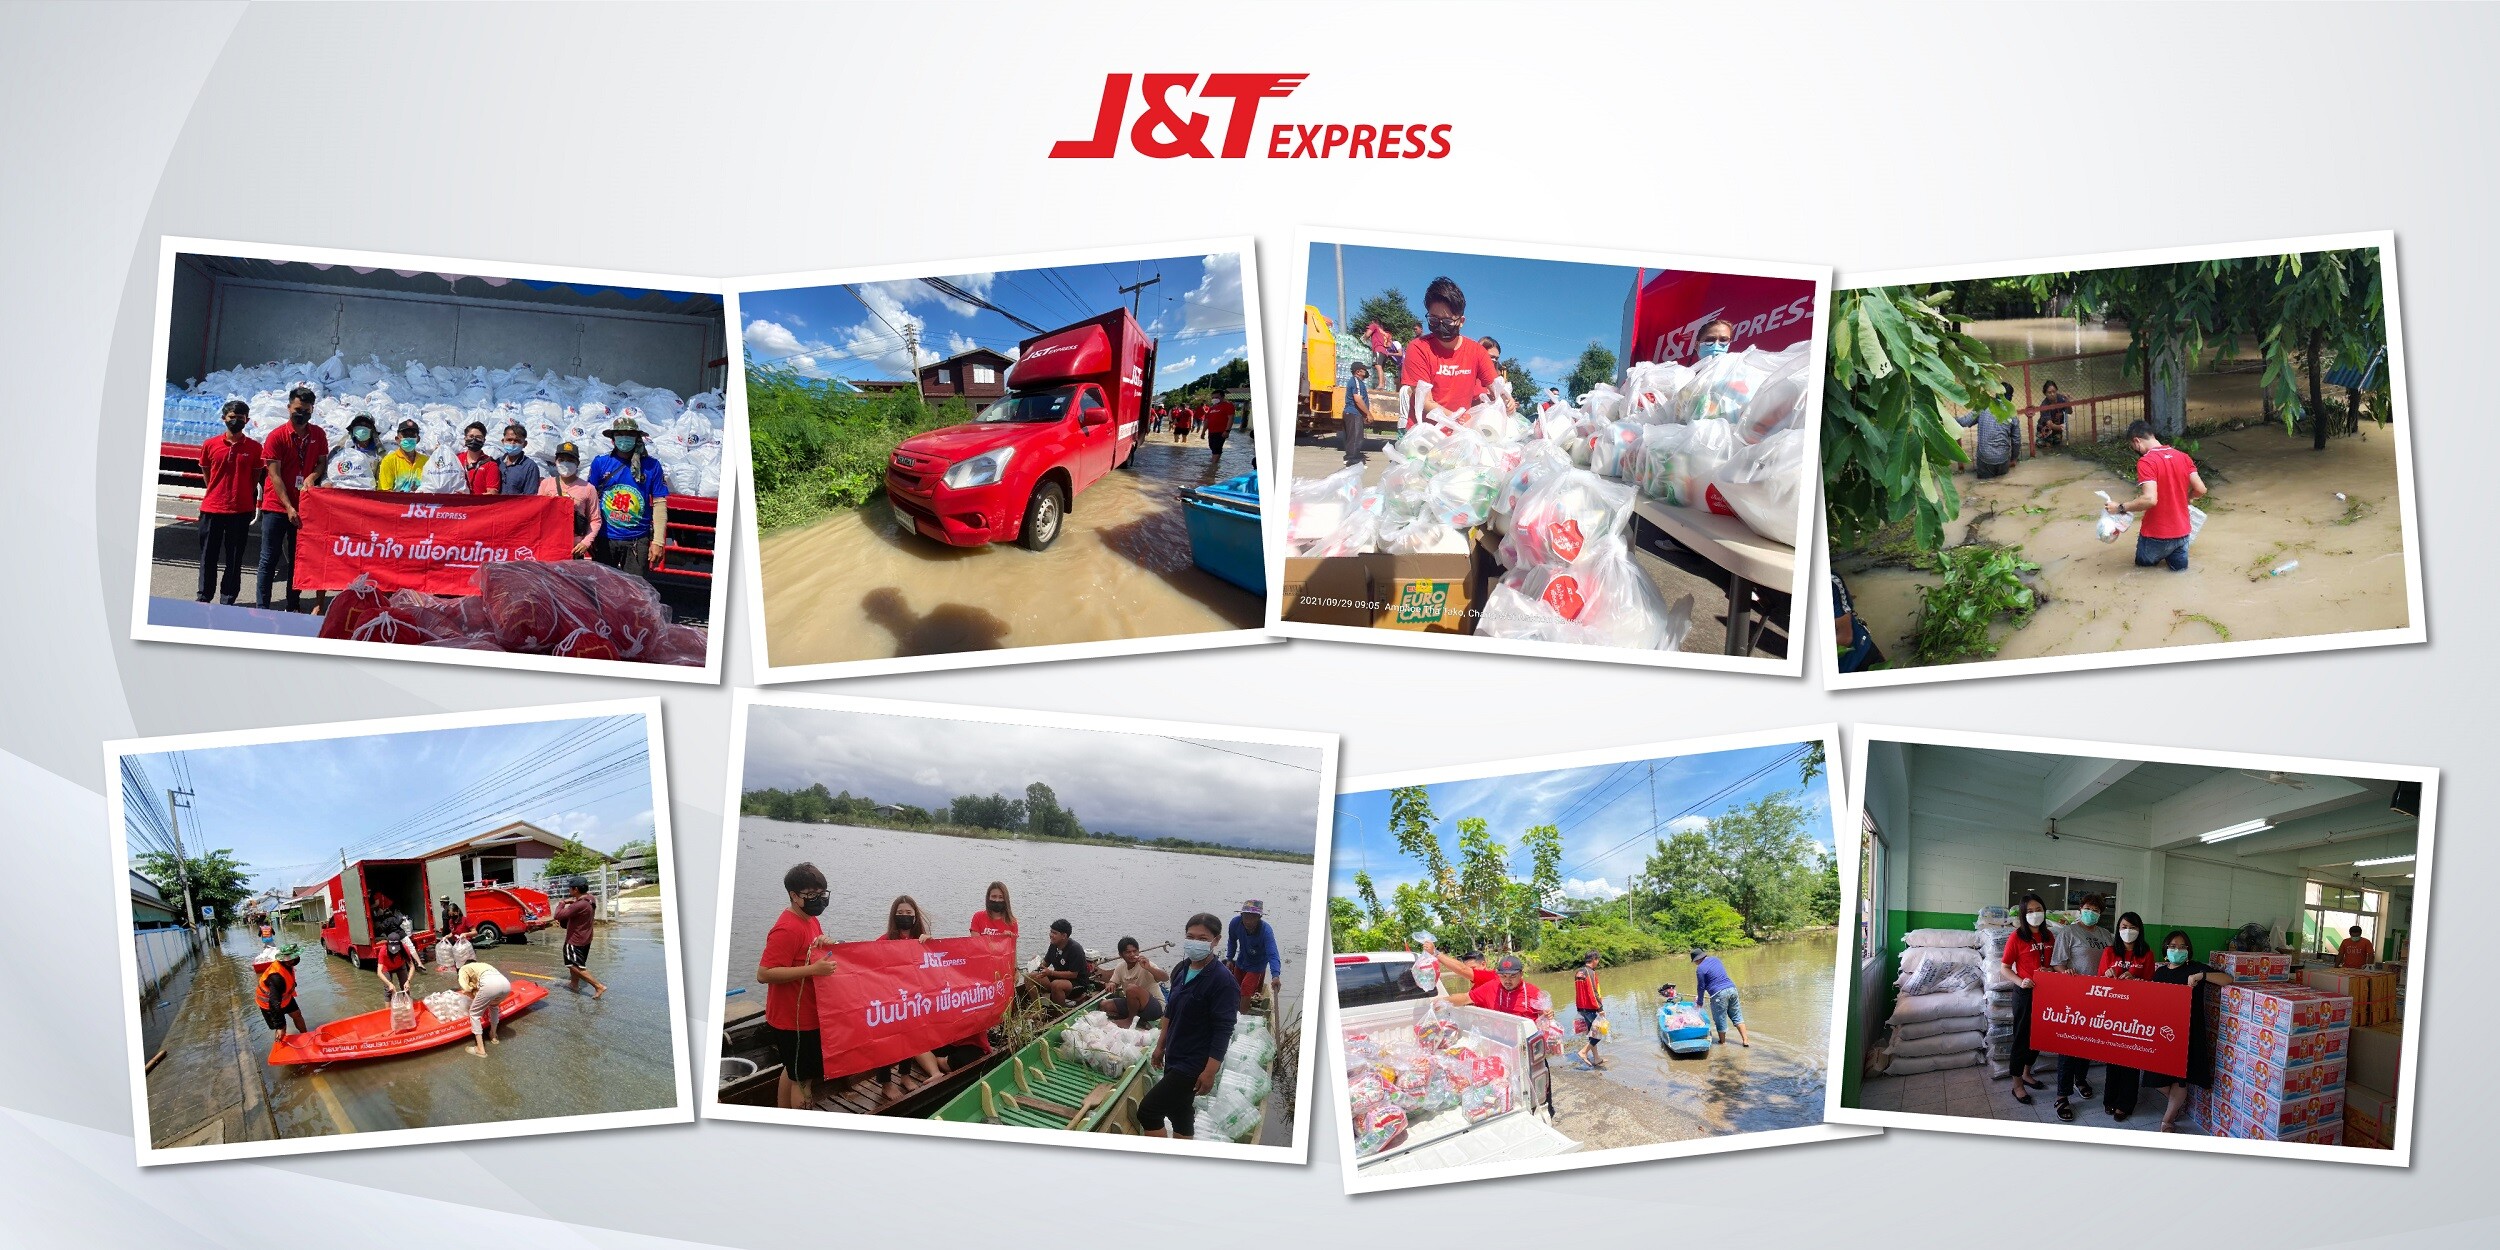 J&T Express Thailand ปูพรมส่งมอบความช่วยเหลือทั่วประเทศไทยในโครงการ "ปันน้ำใจเพื่อคนไทย"